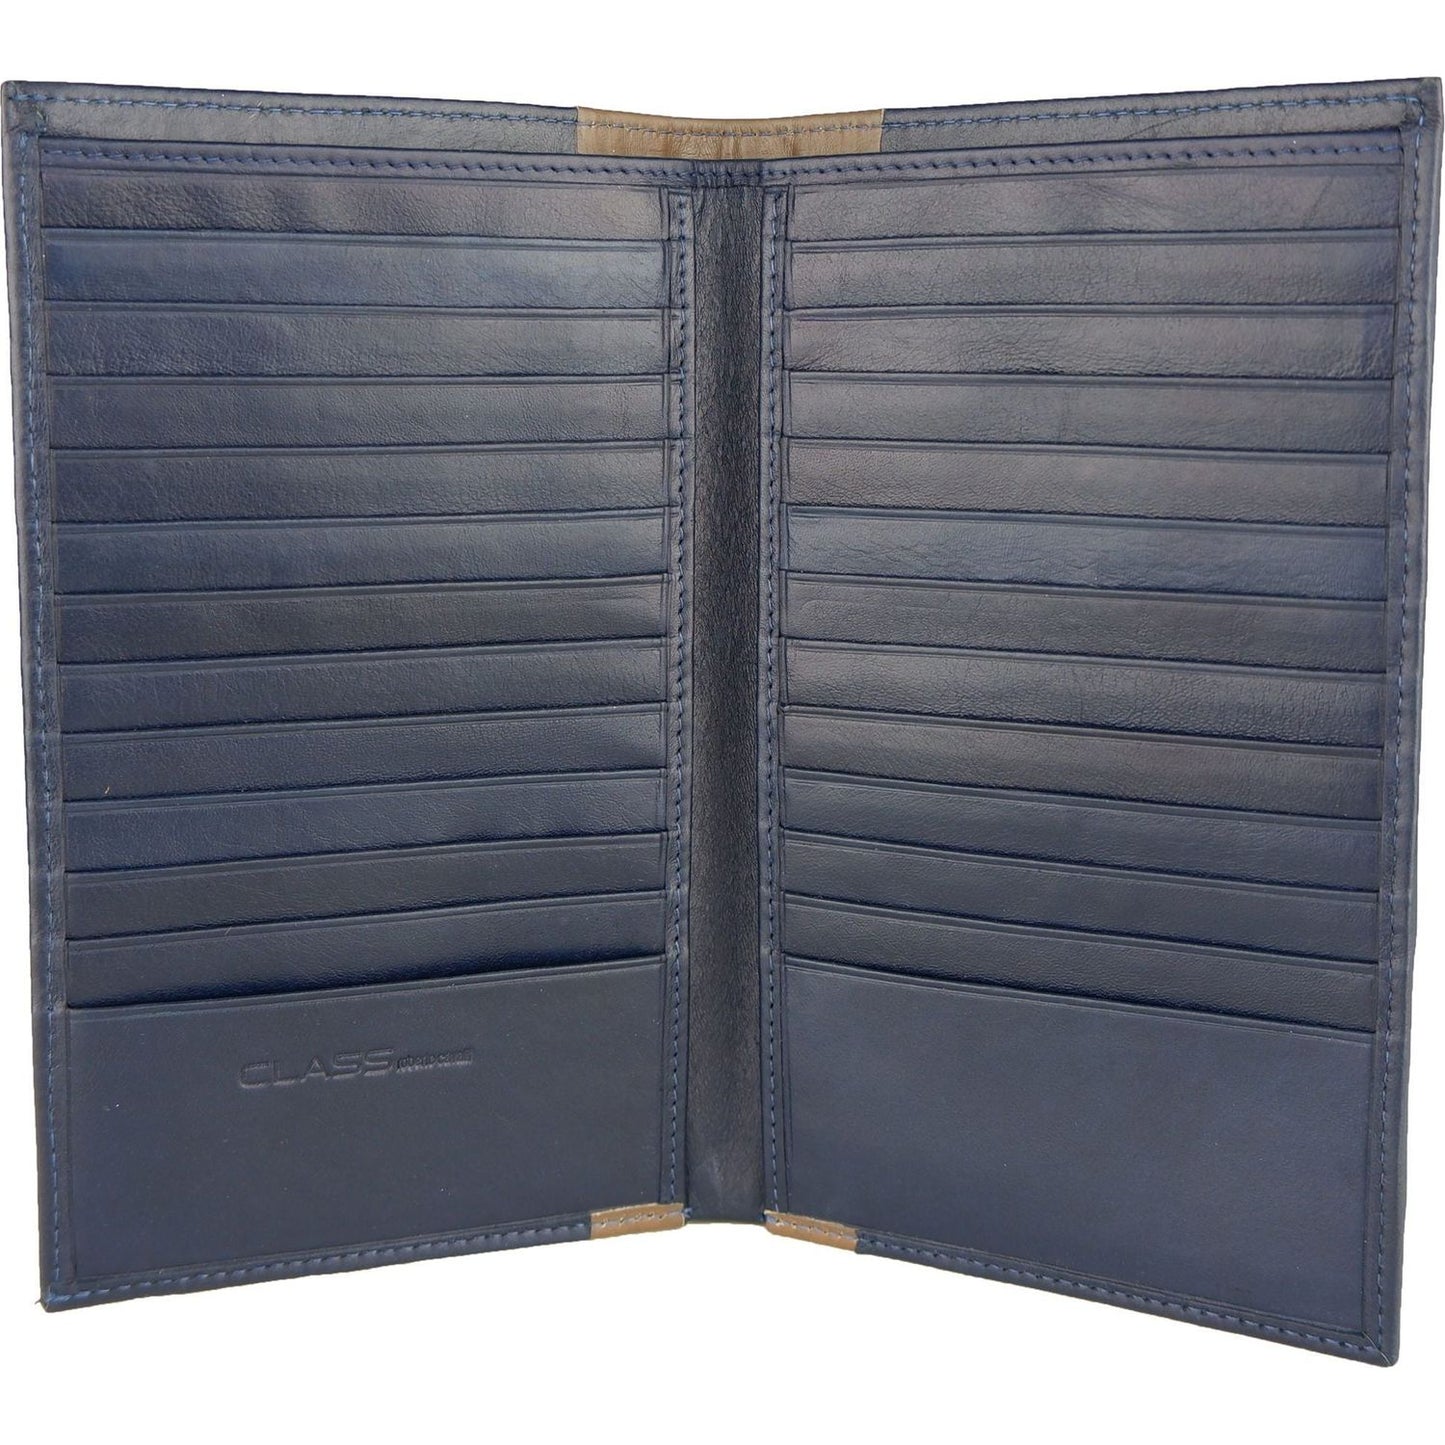 Cavalli Class Sleek Blue and Beige Leather Wallet ar-cavalli-class-wallet MAN WALLETS product-6851-804284844-scaled-f2dd8e77-698.jpg